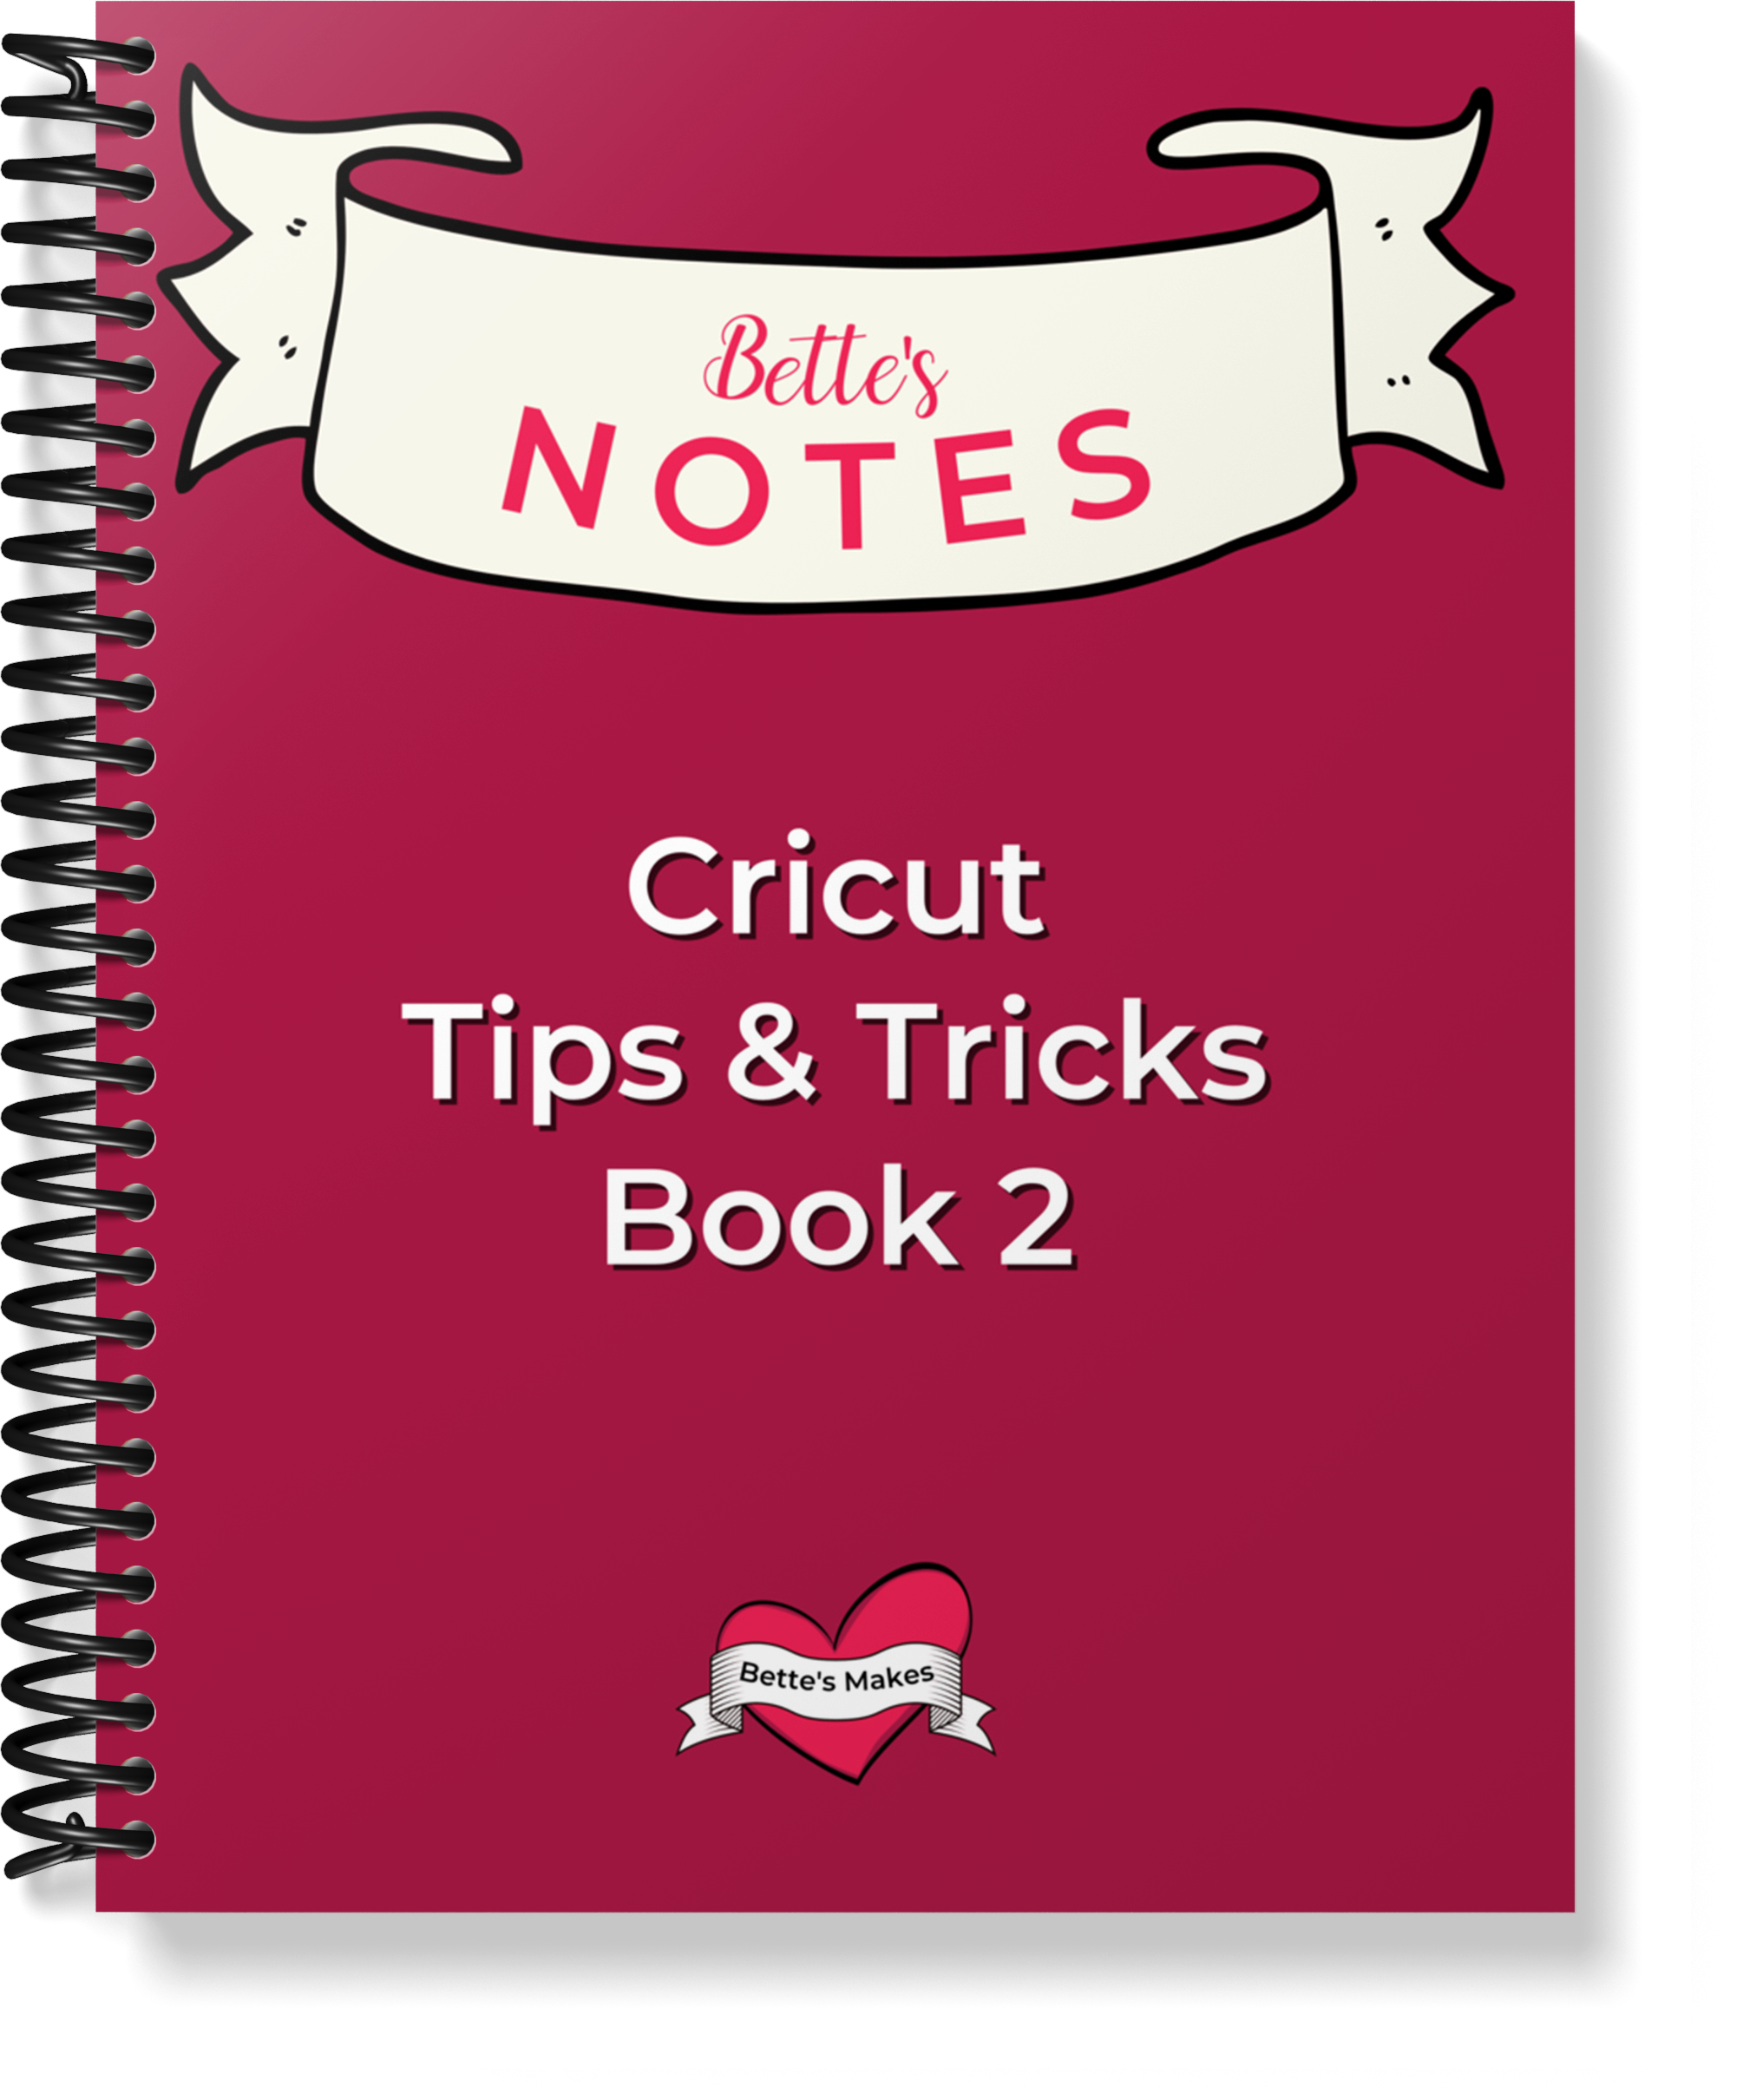 More Cricut Tips & Tricks